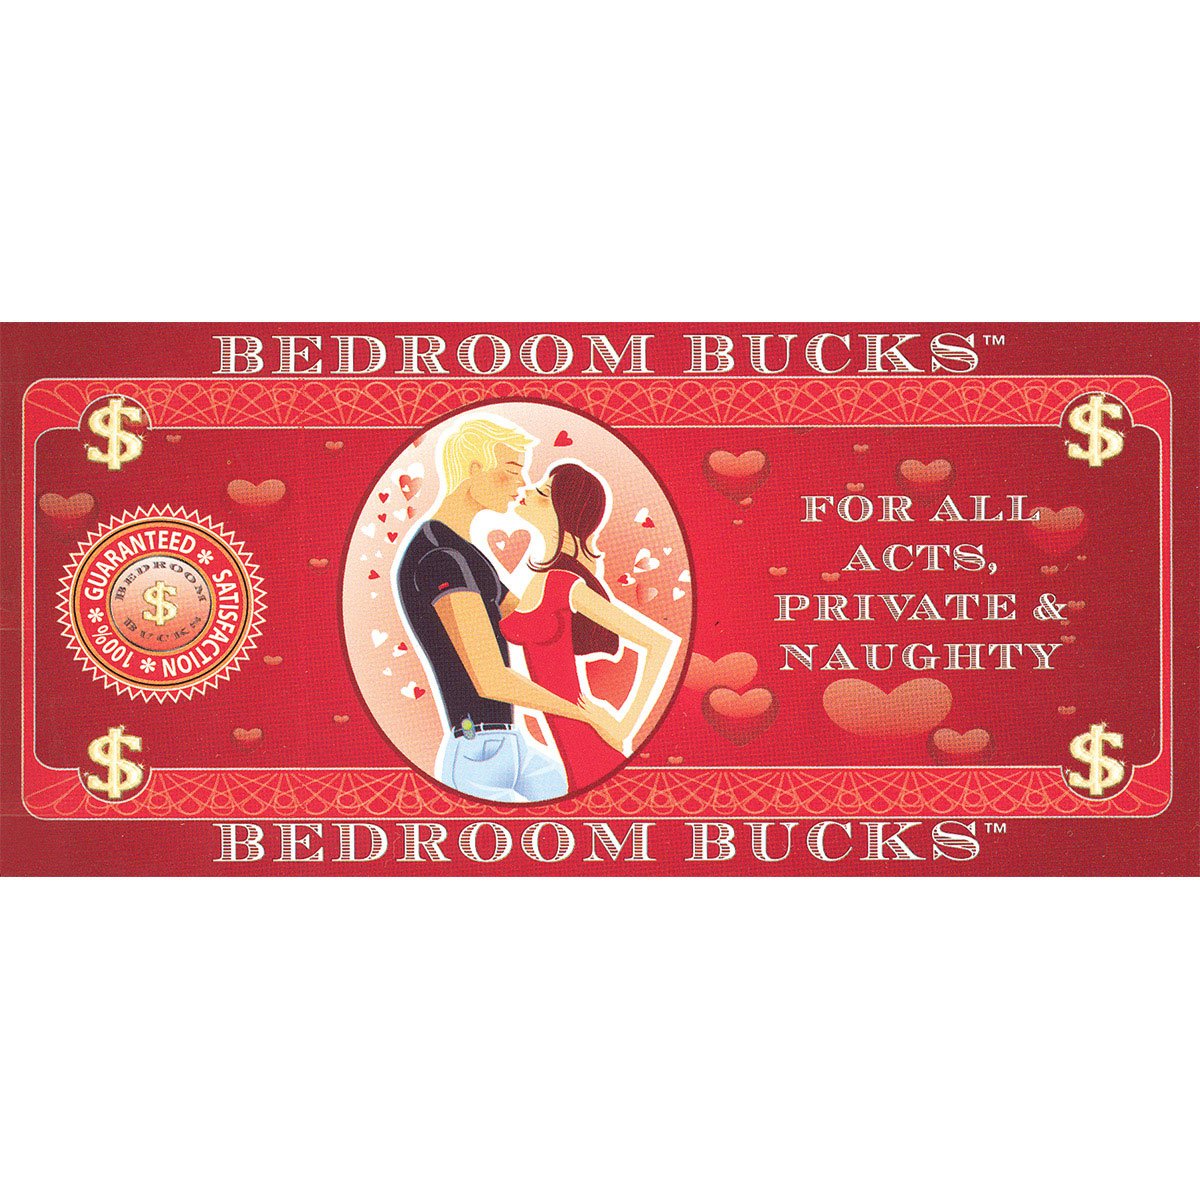 Ball & Chain Bedroom Bucks Coupons